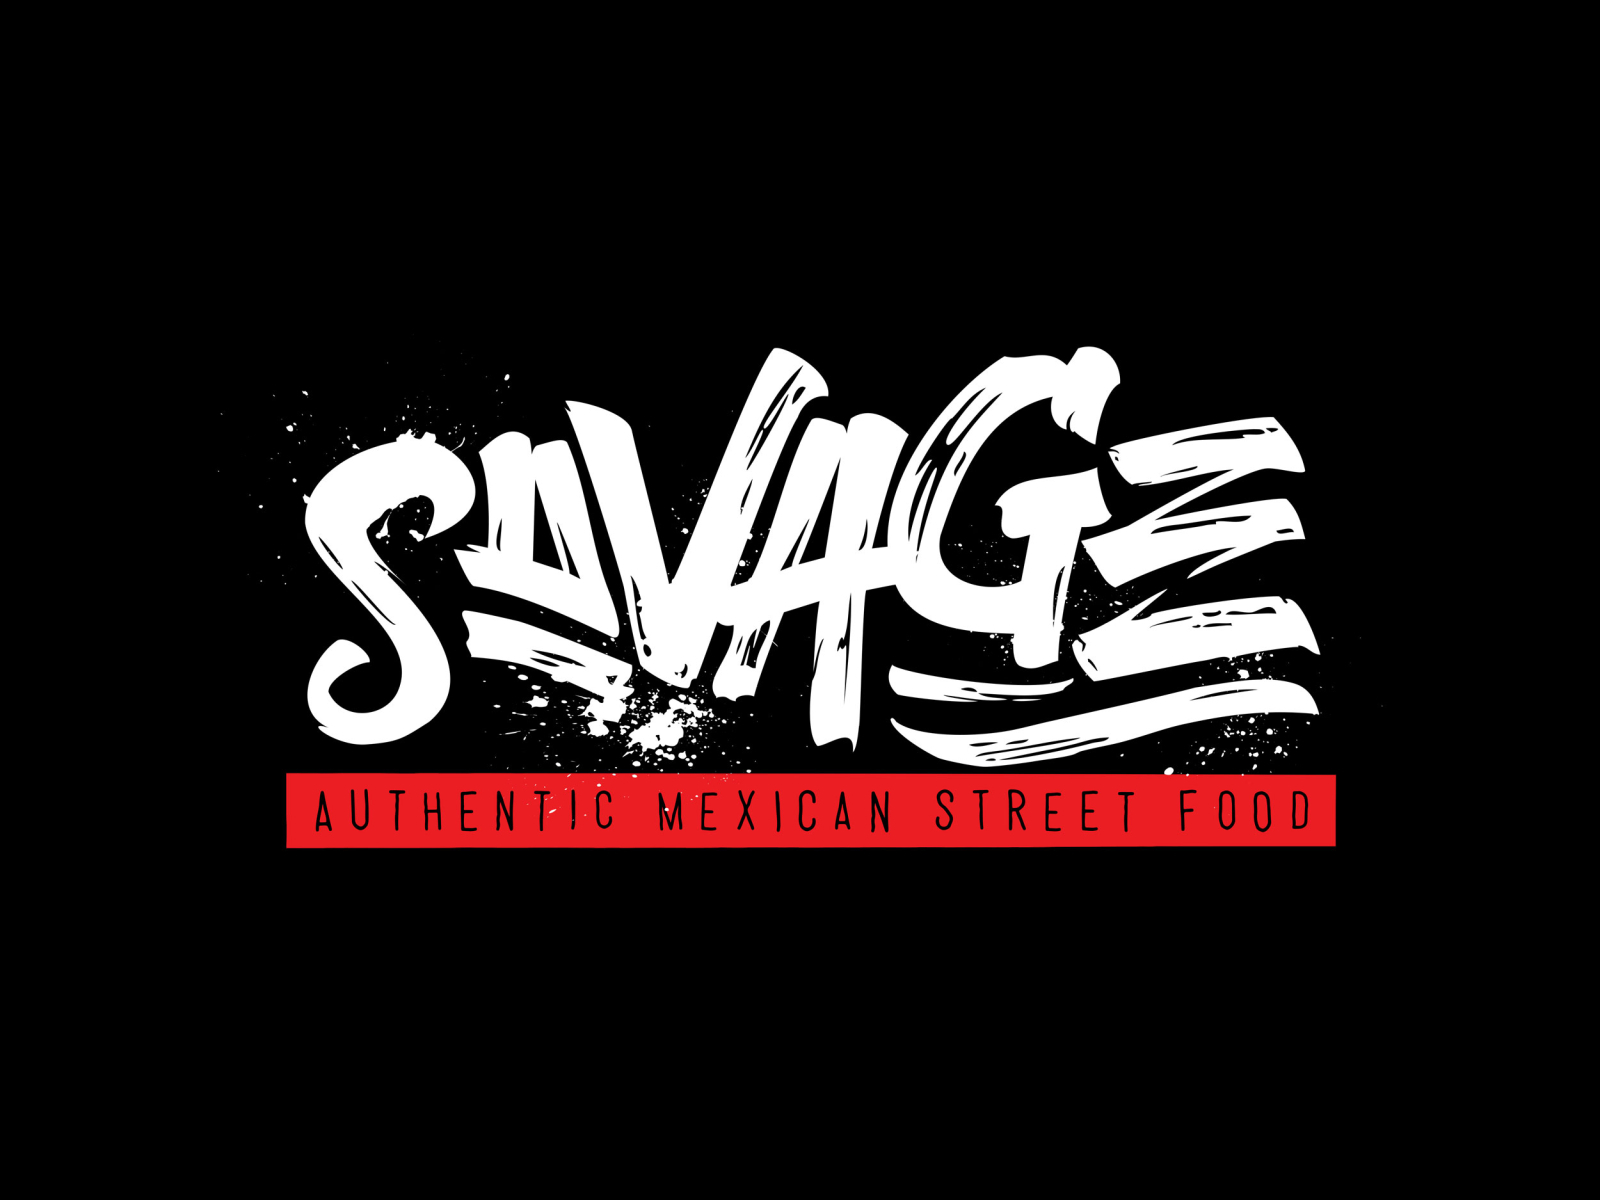 Savage Logo by Leslie Ferrer on Dribbble